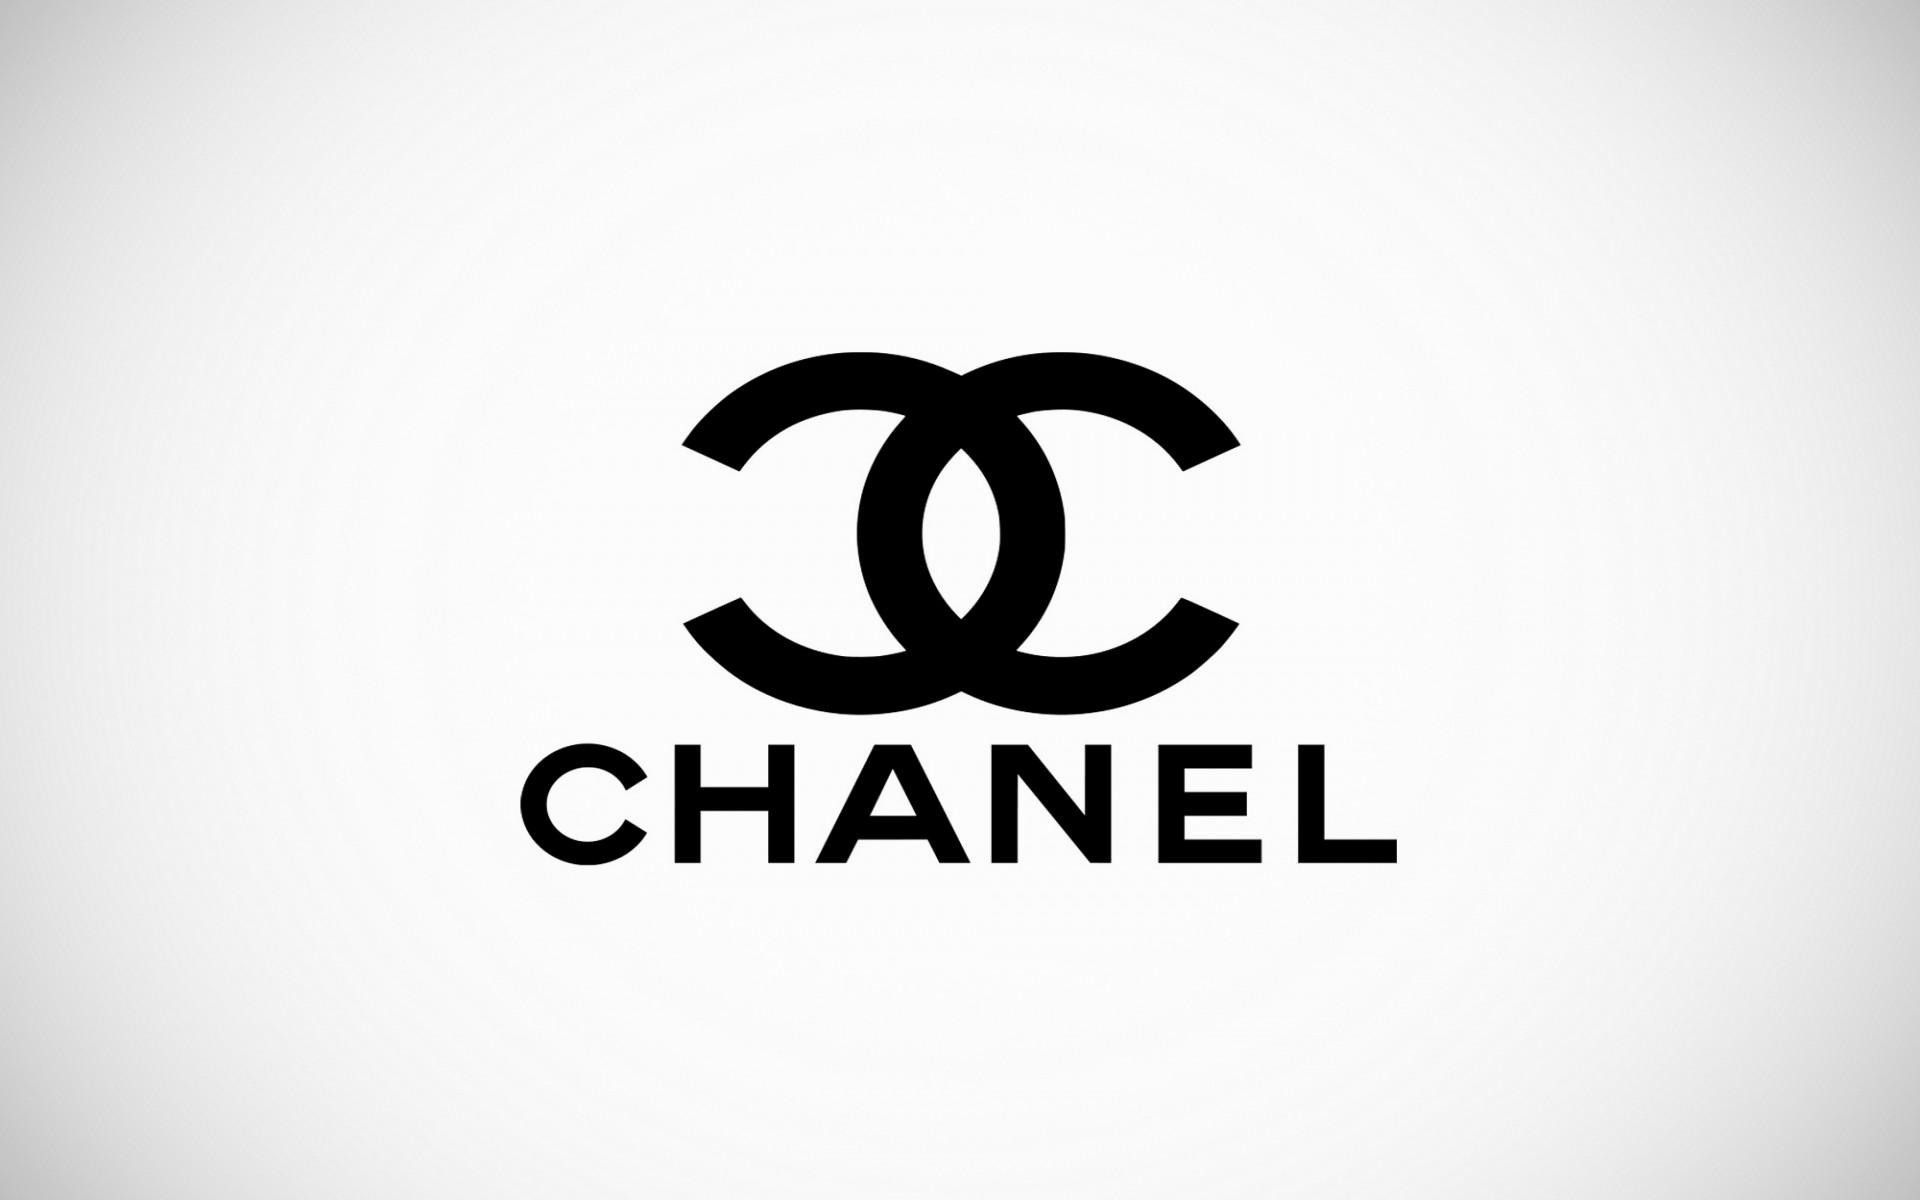 Best Of Coco Chanel Desktop Wallpaper. Chanel wallpaper, Chanel, Chanel logo